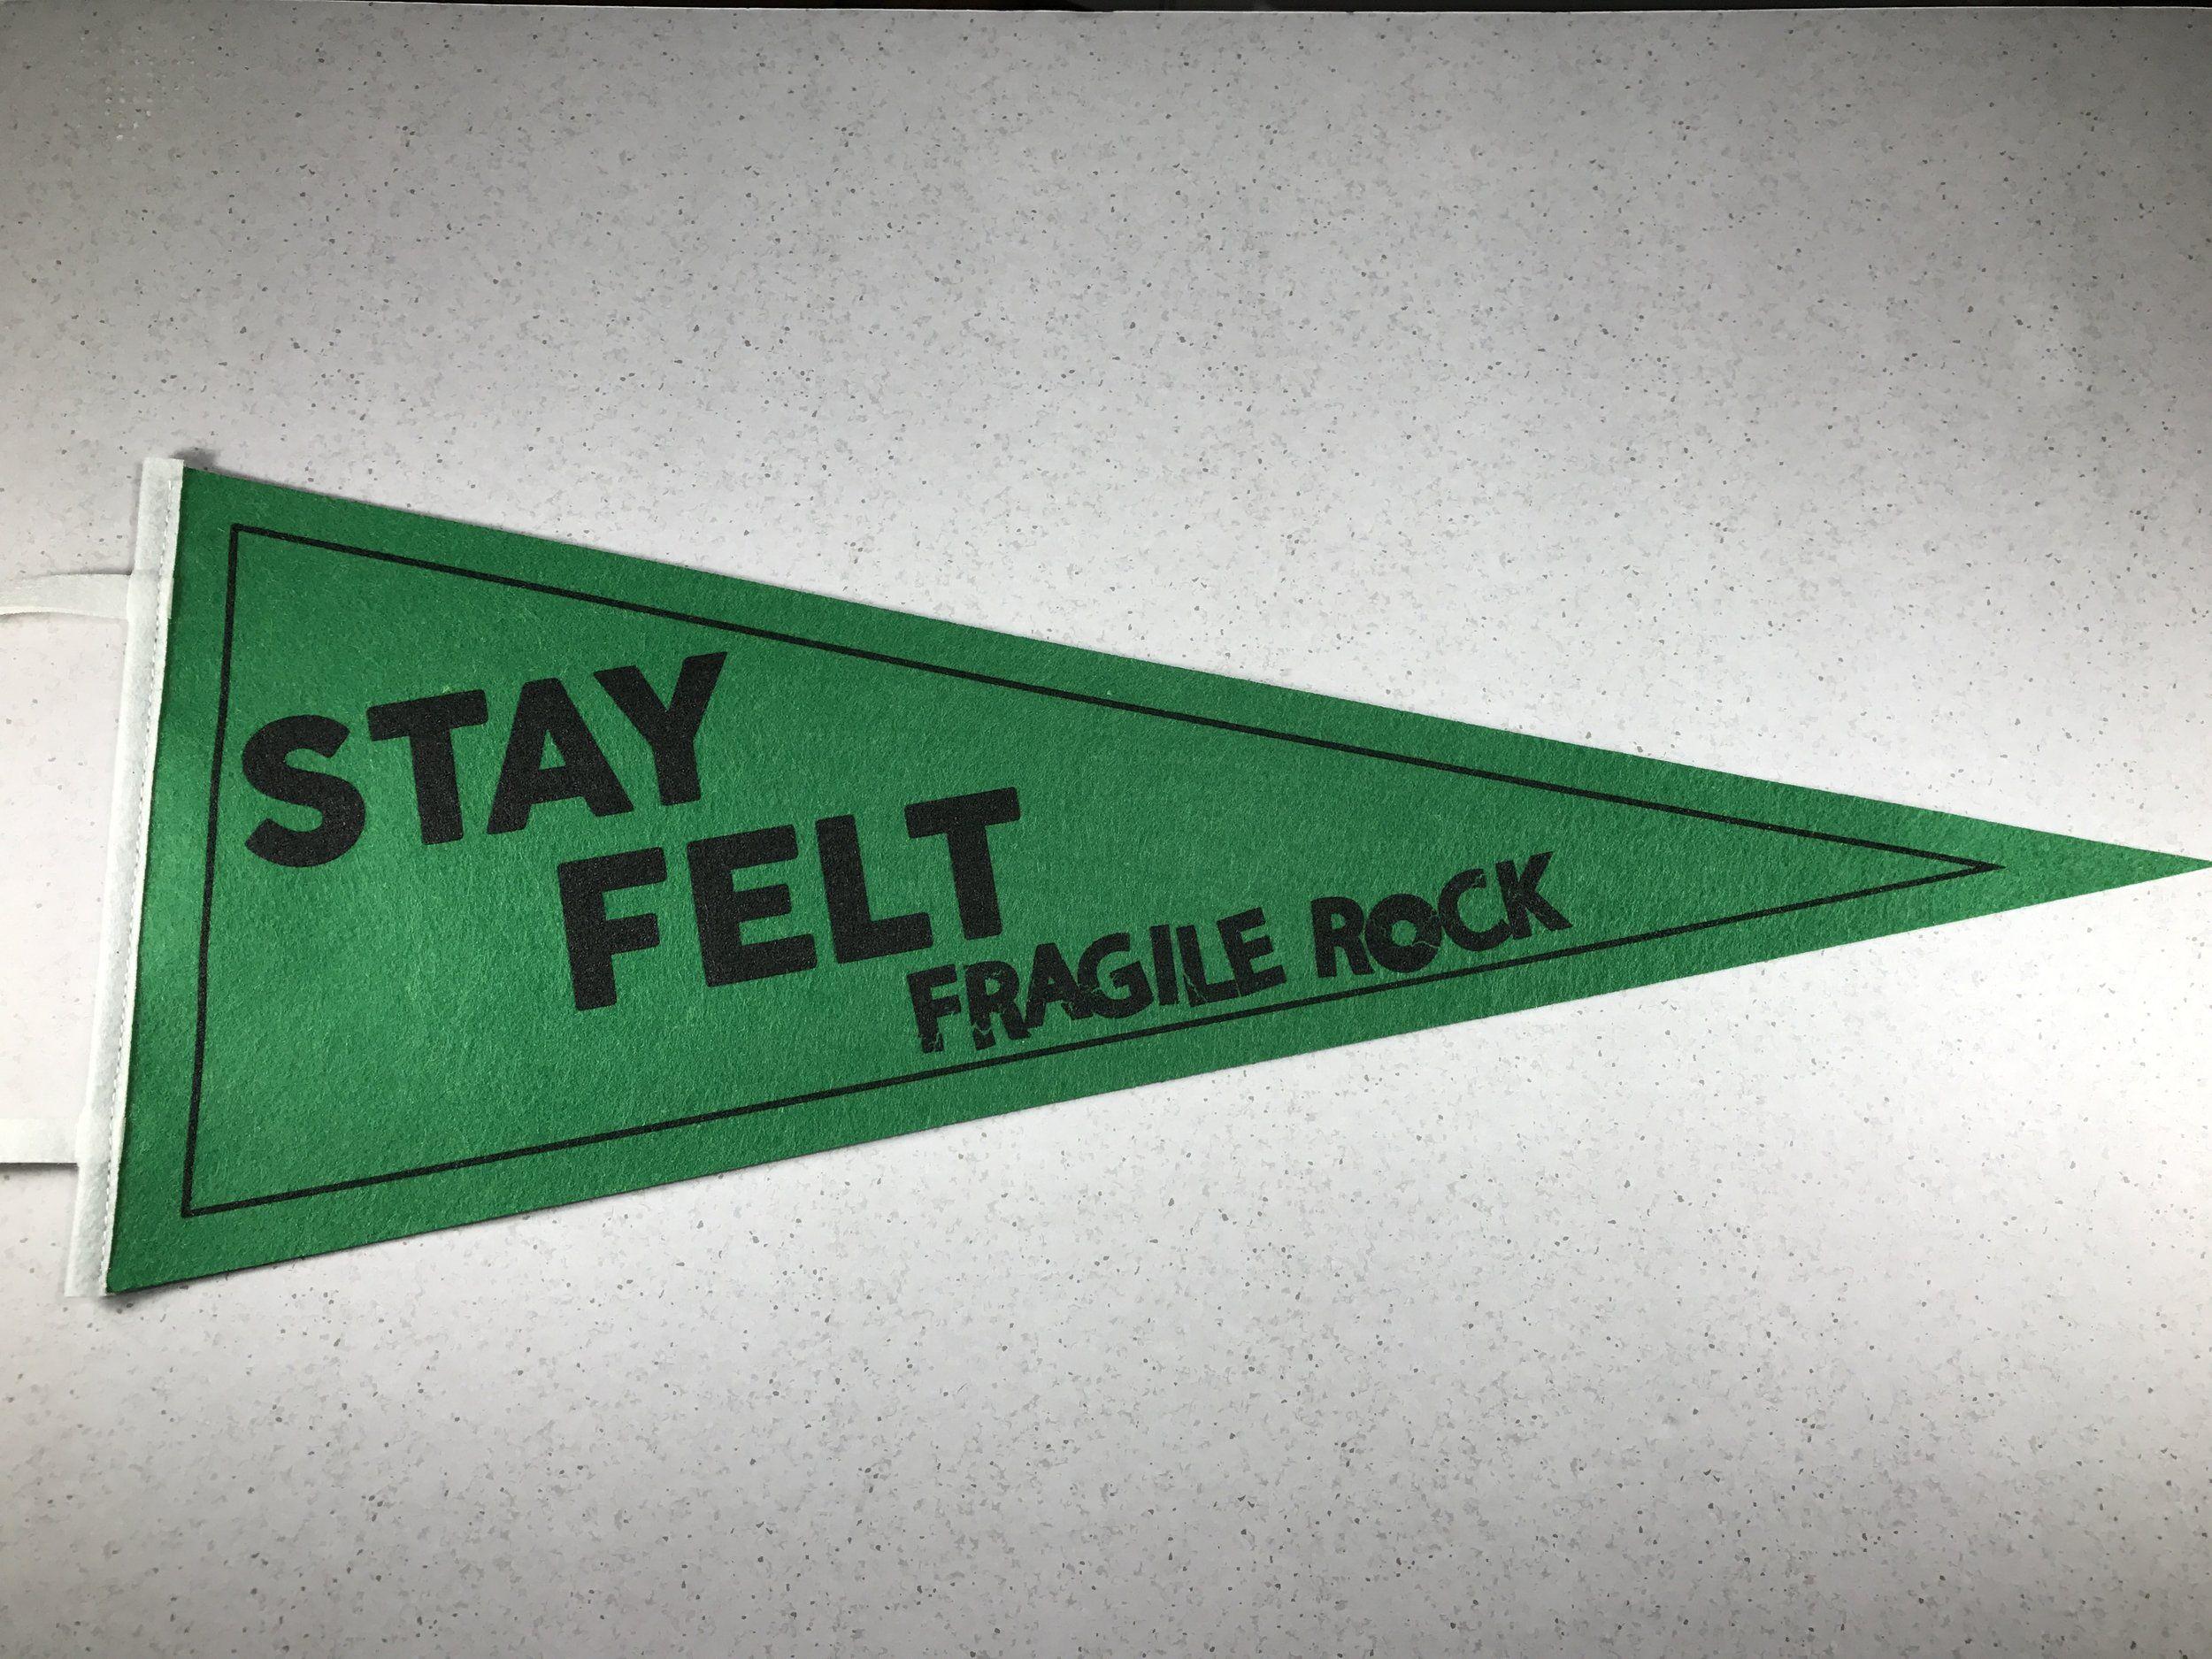 Green Pennant Logo - New! Fragile Rock Stay Felt Pennant (GREEN)